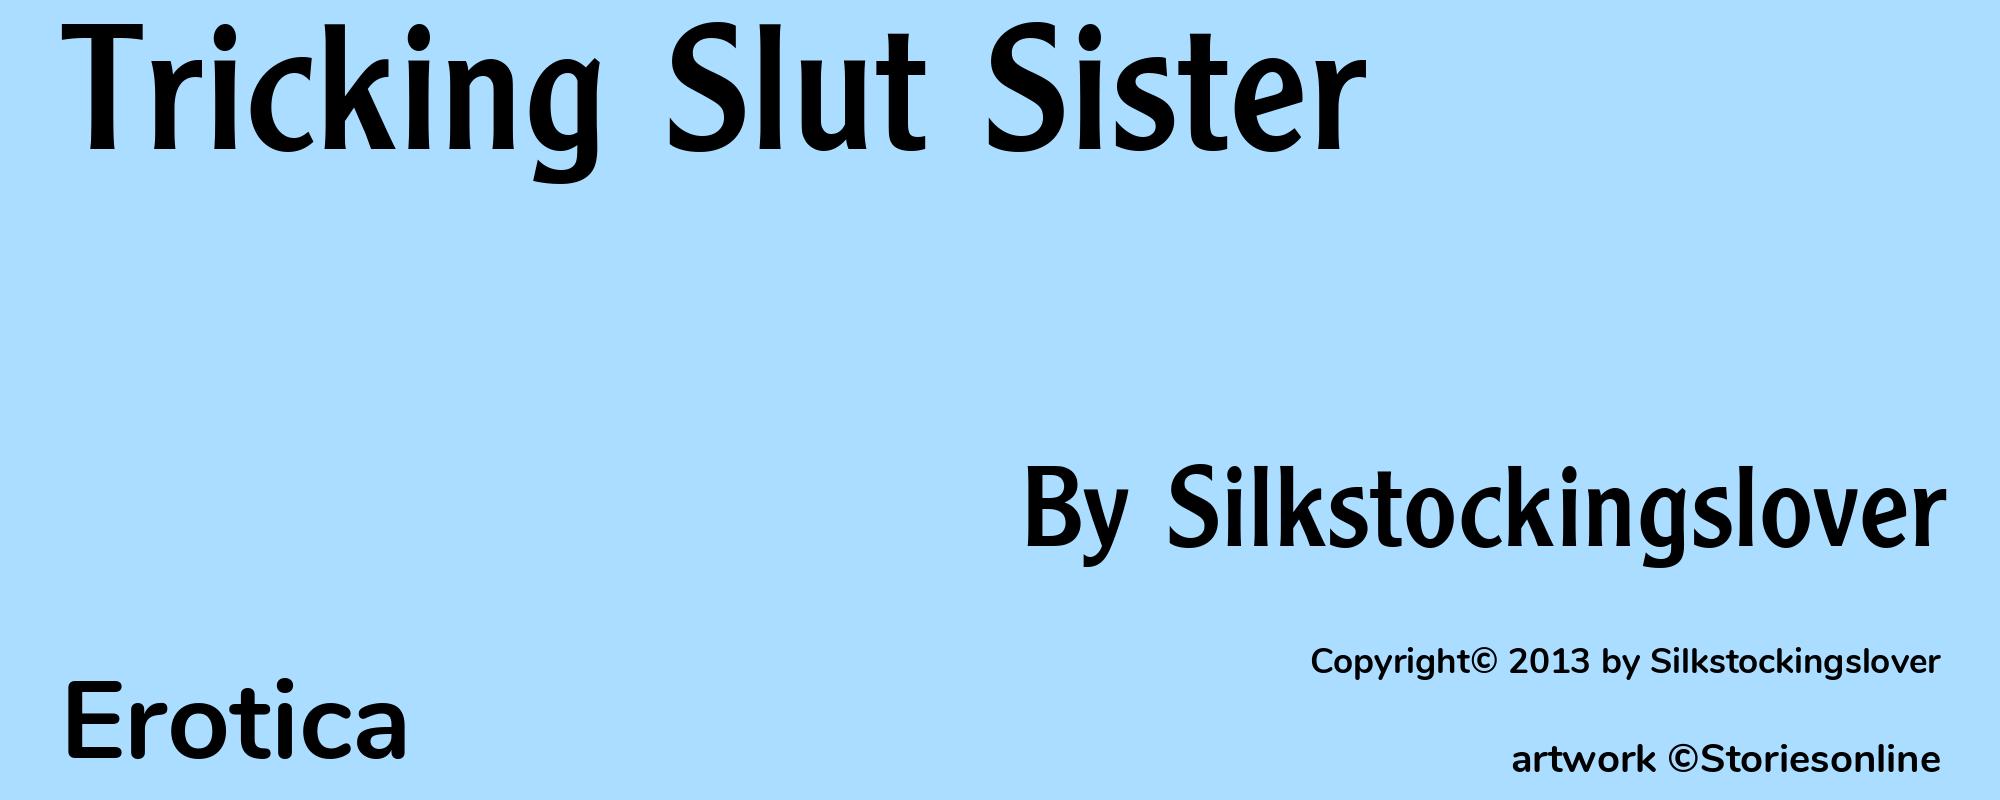 Tricking Slut Sister - Cover